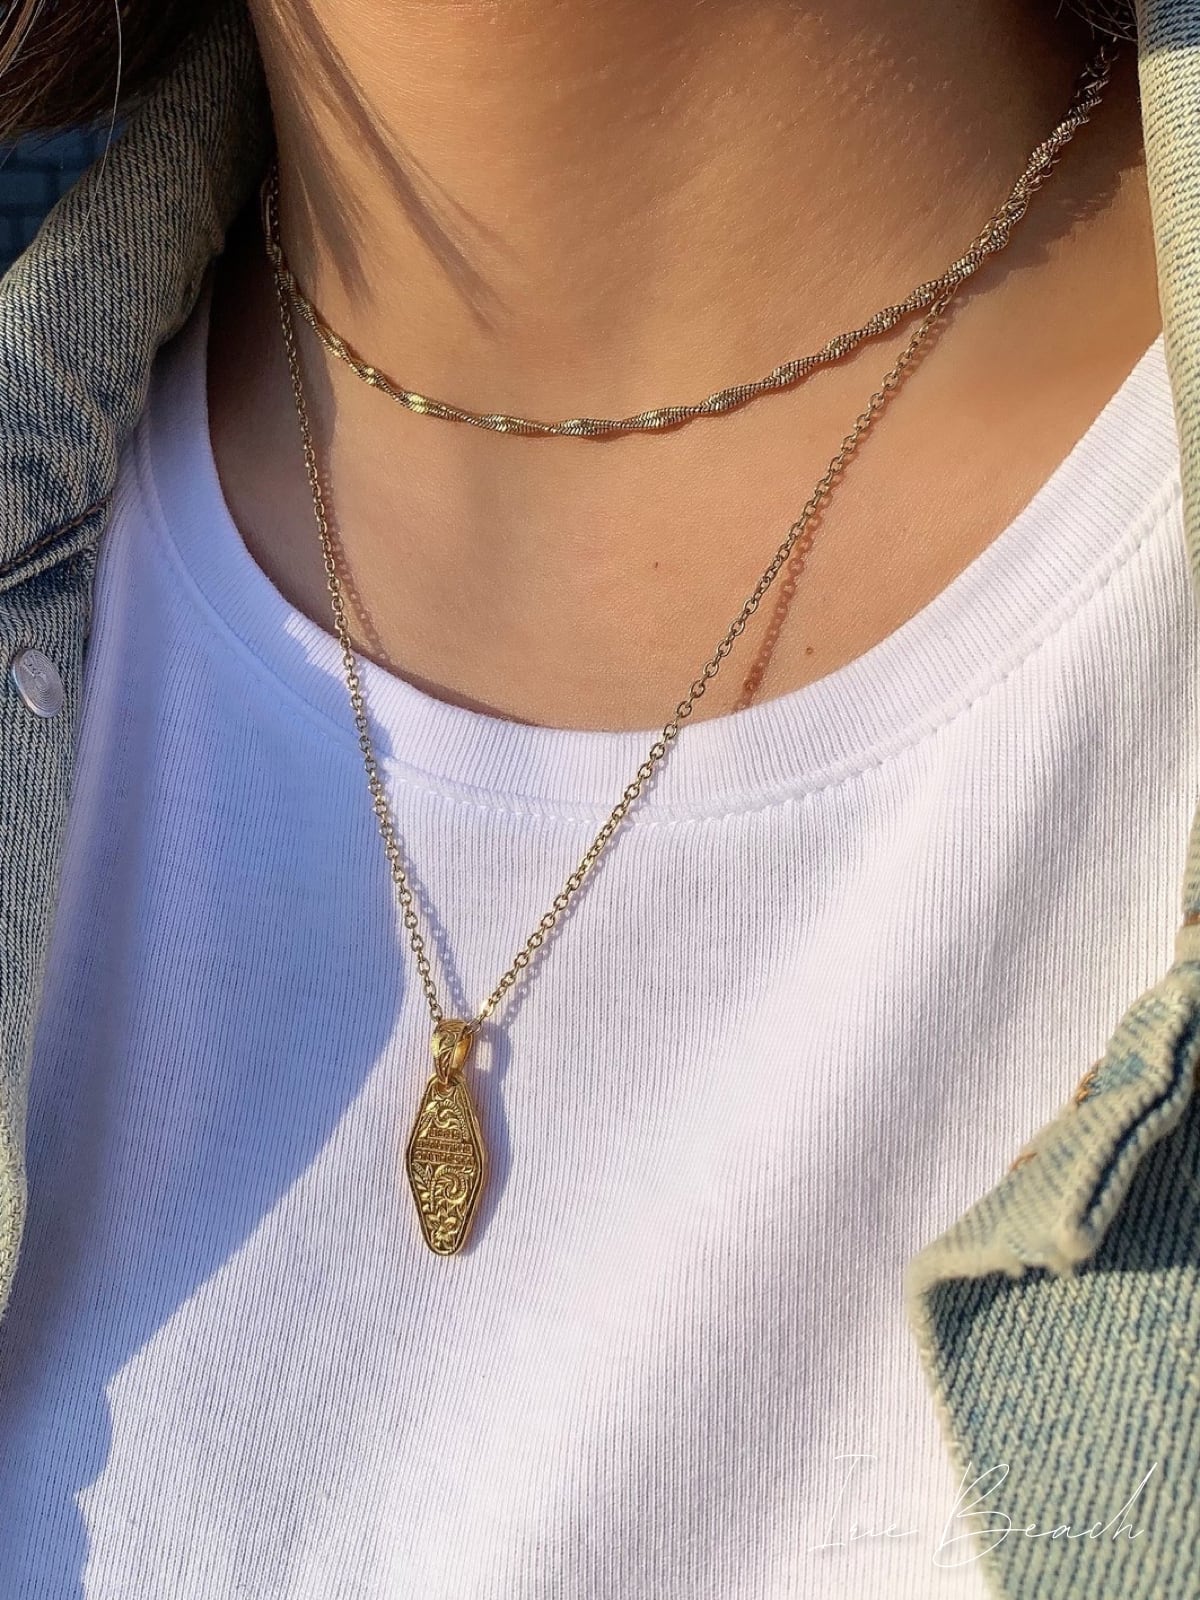 keytag necklace | IRIEBEACH